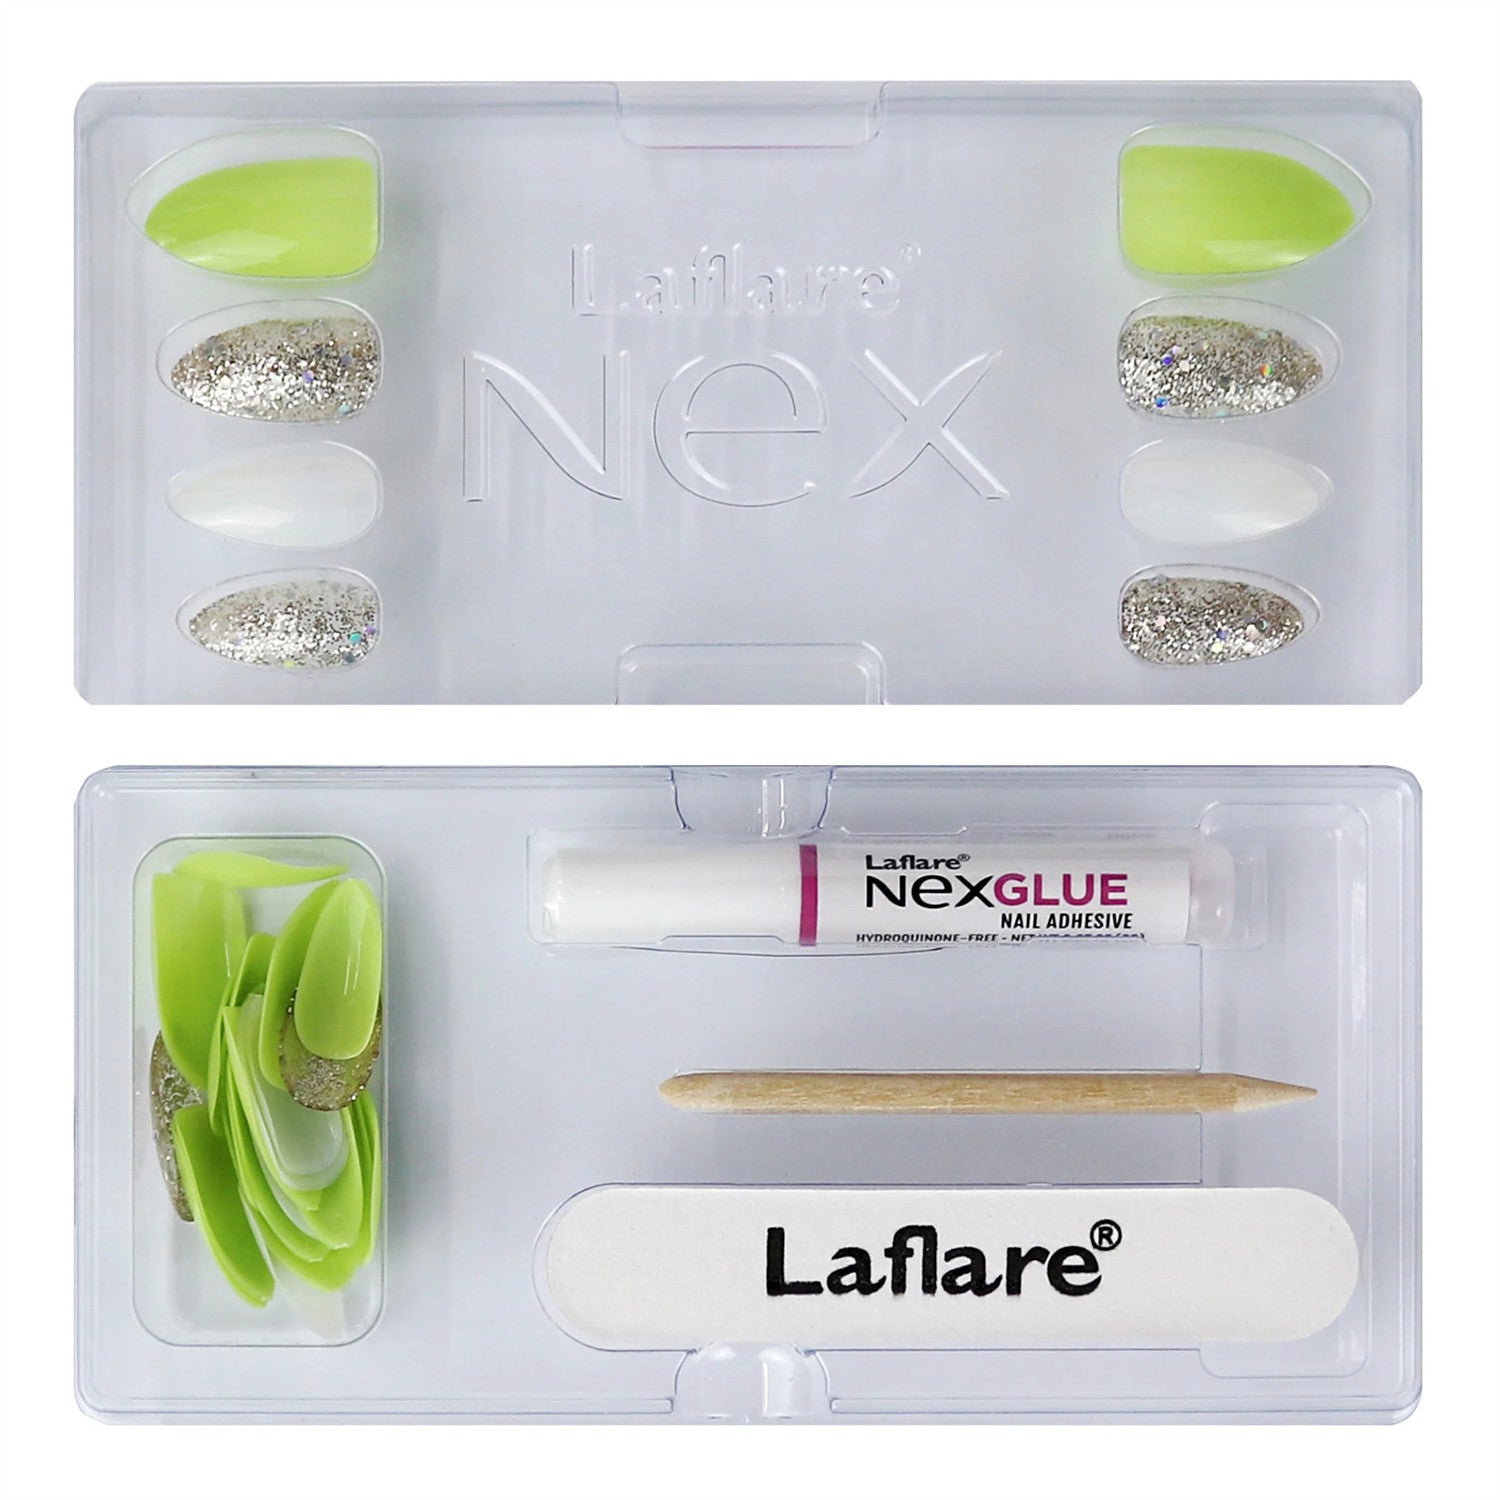 Laflare Nex Regular Nail Tip